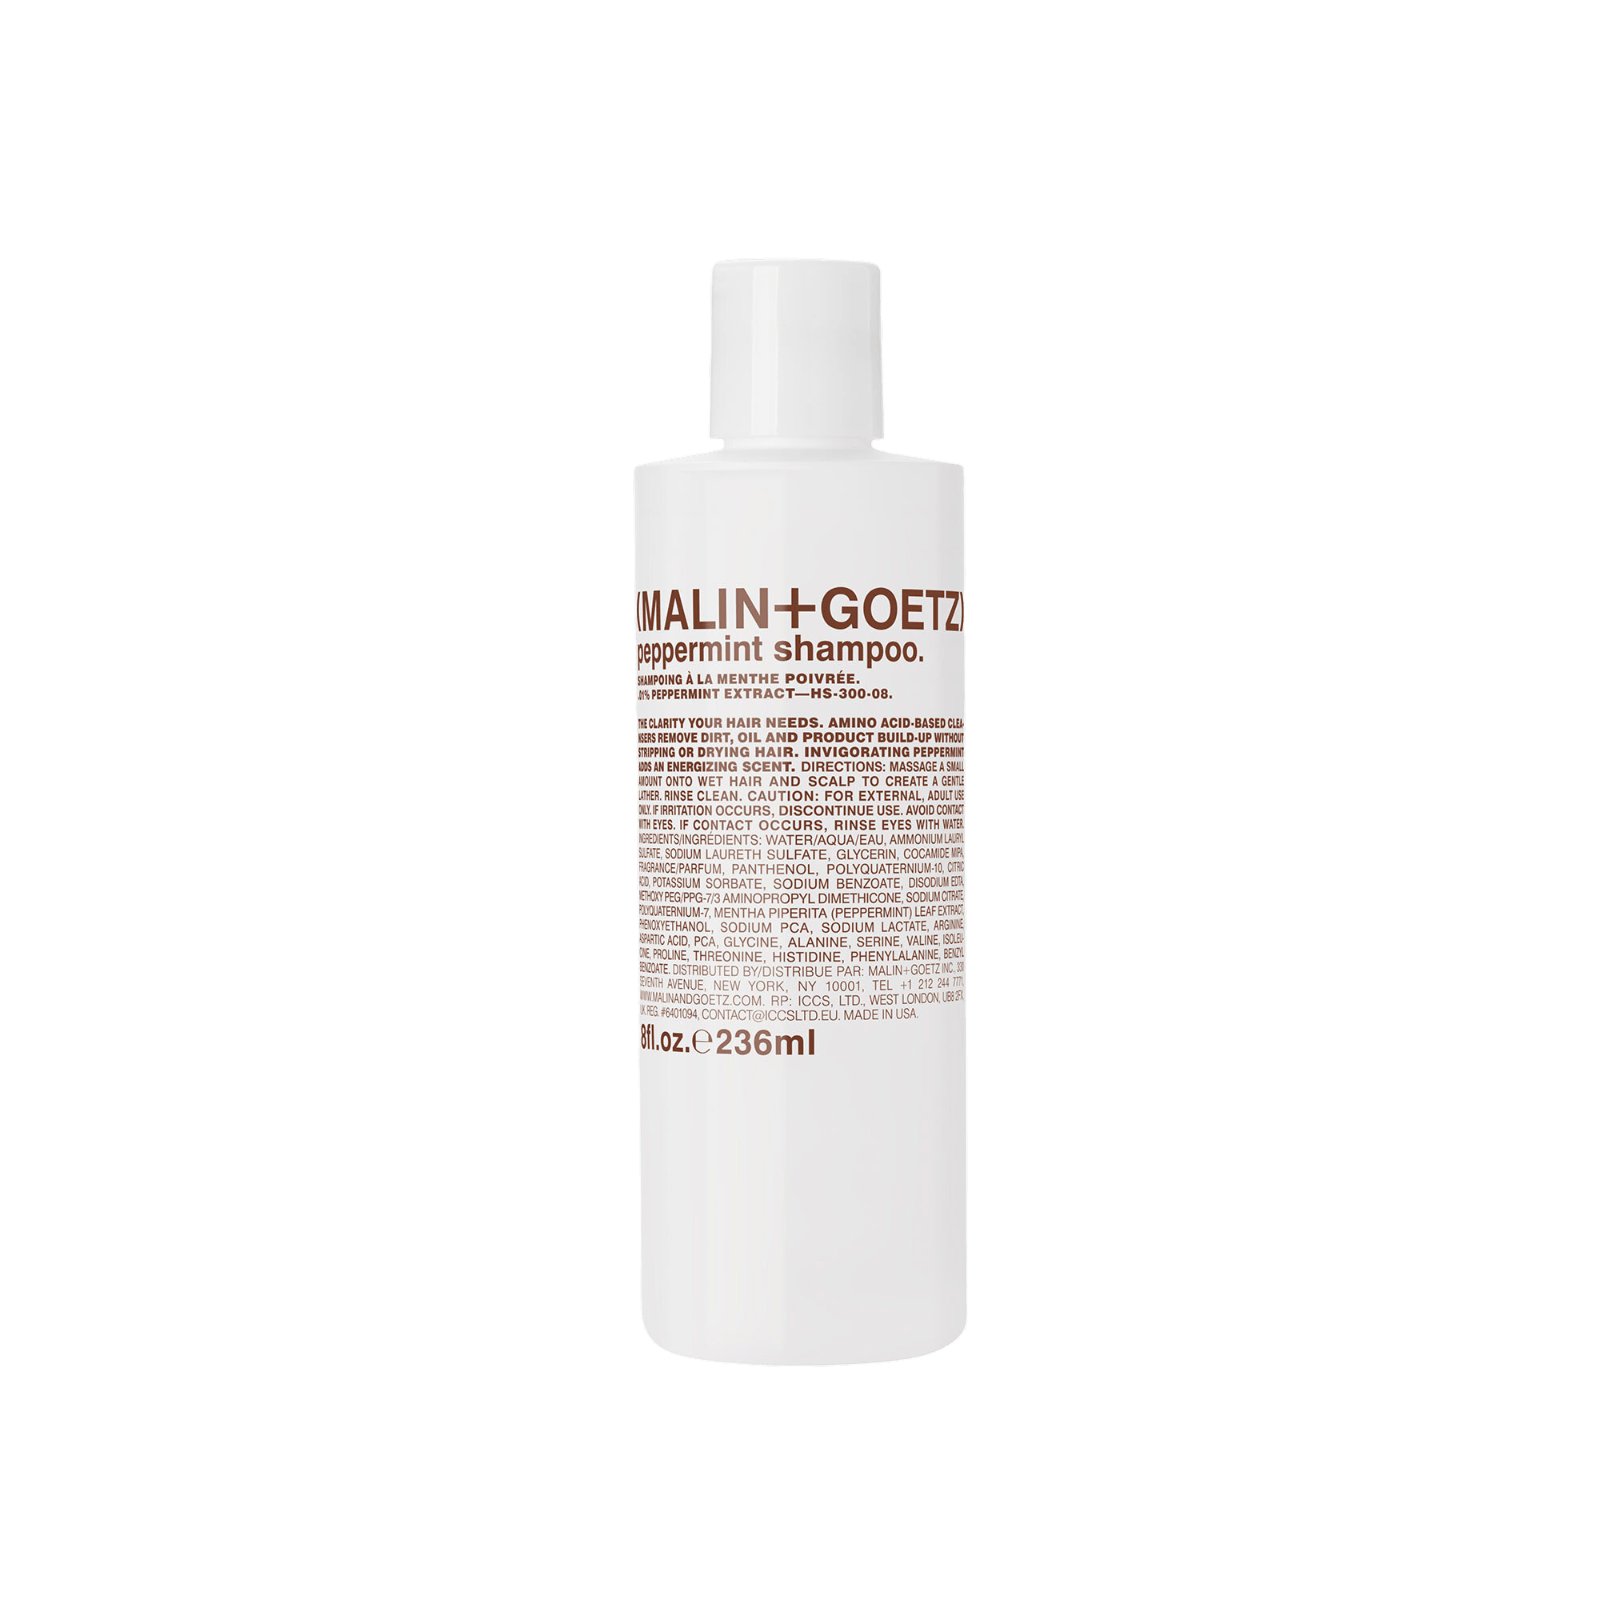 Malin + Goetz - peppermint shampoo | Perfume Lounge